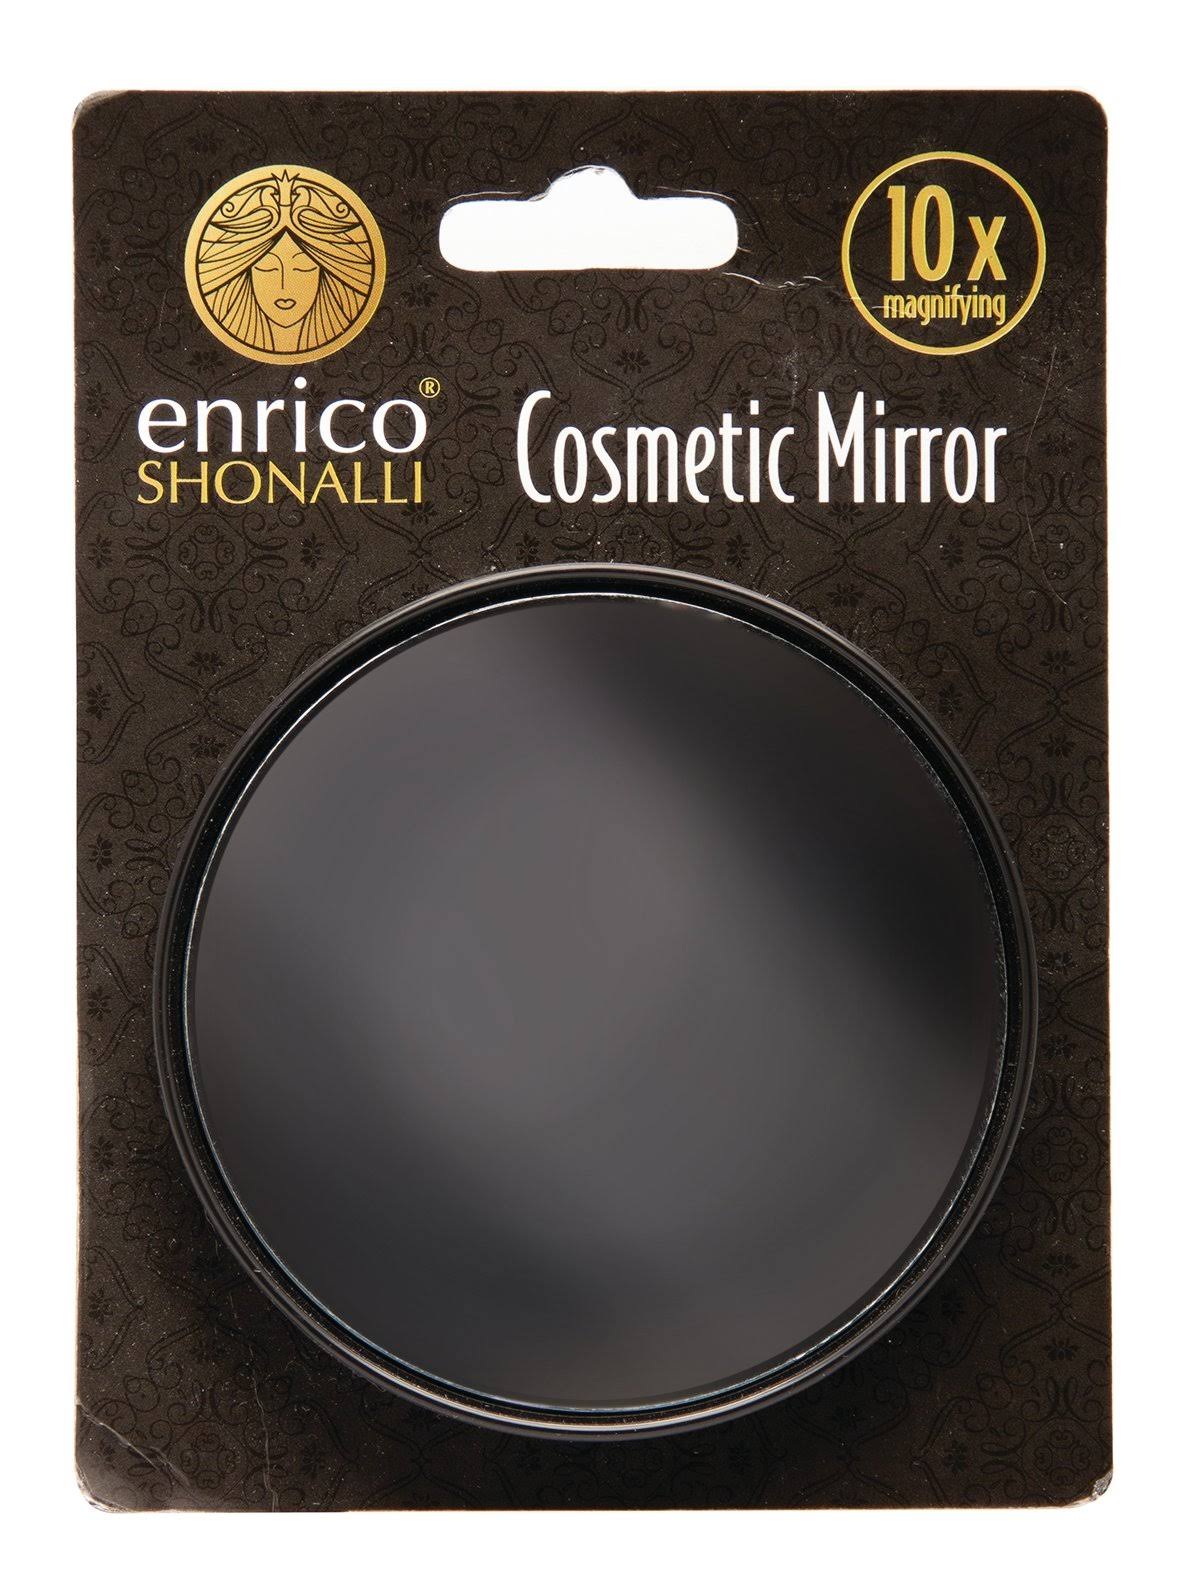 Enrico Cosmetic Mirror 10x Magnifying